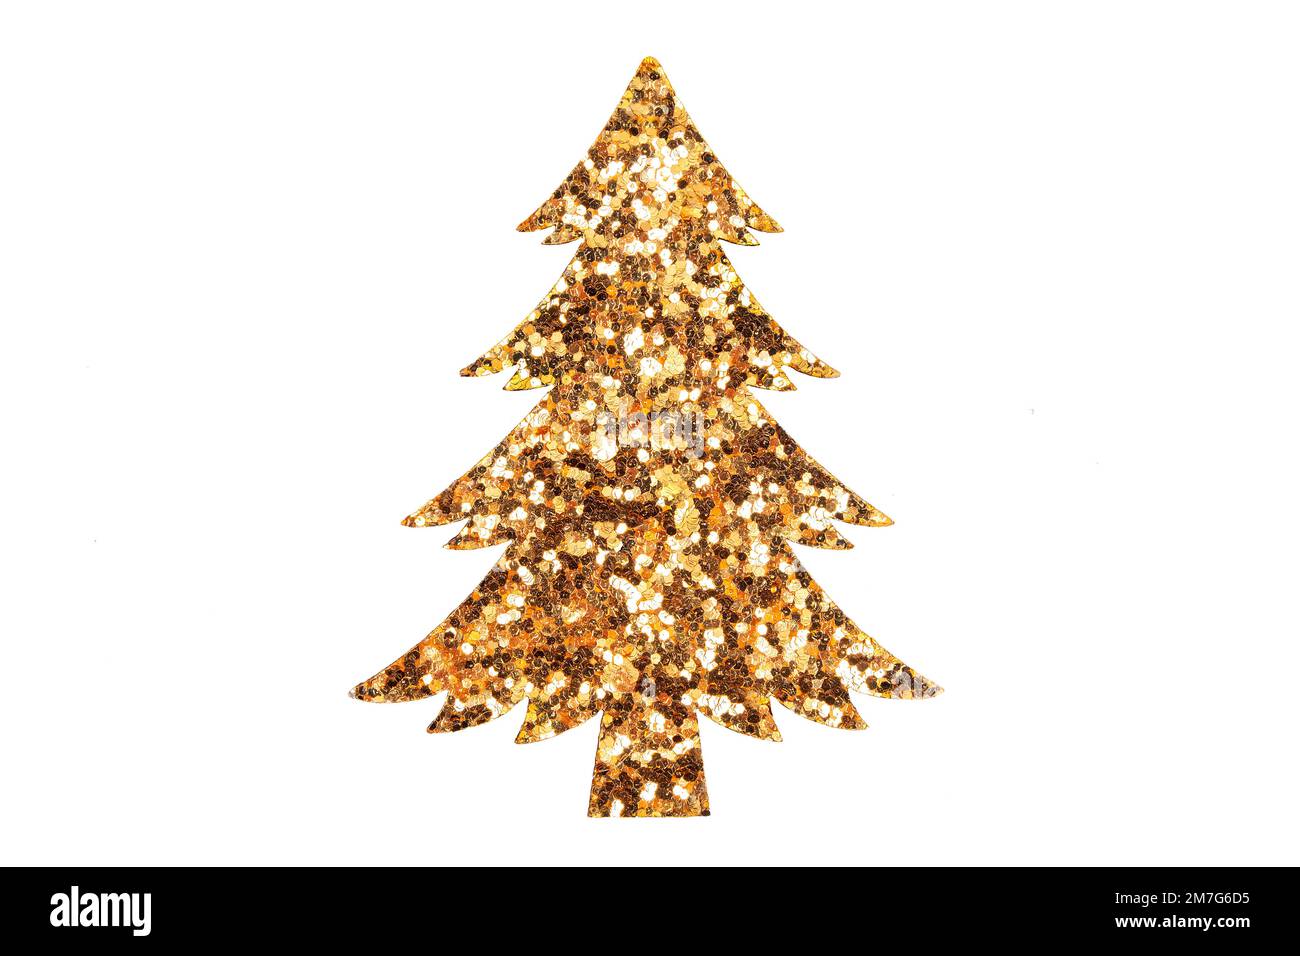 Gold glitter christmas tree isolated on white background Stock Photo